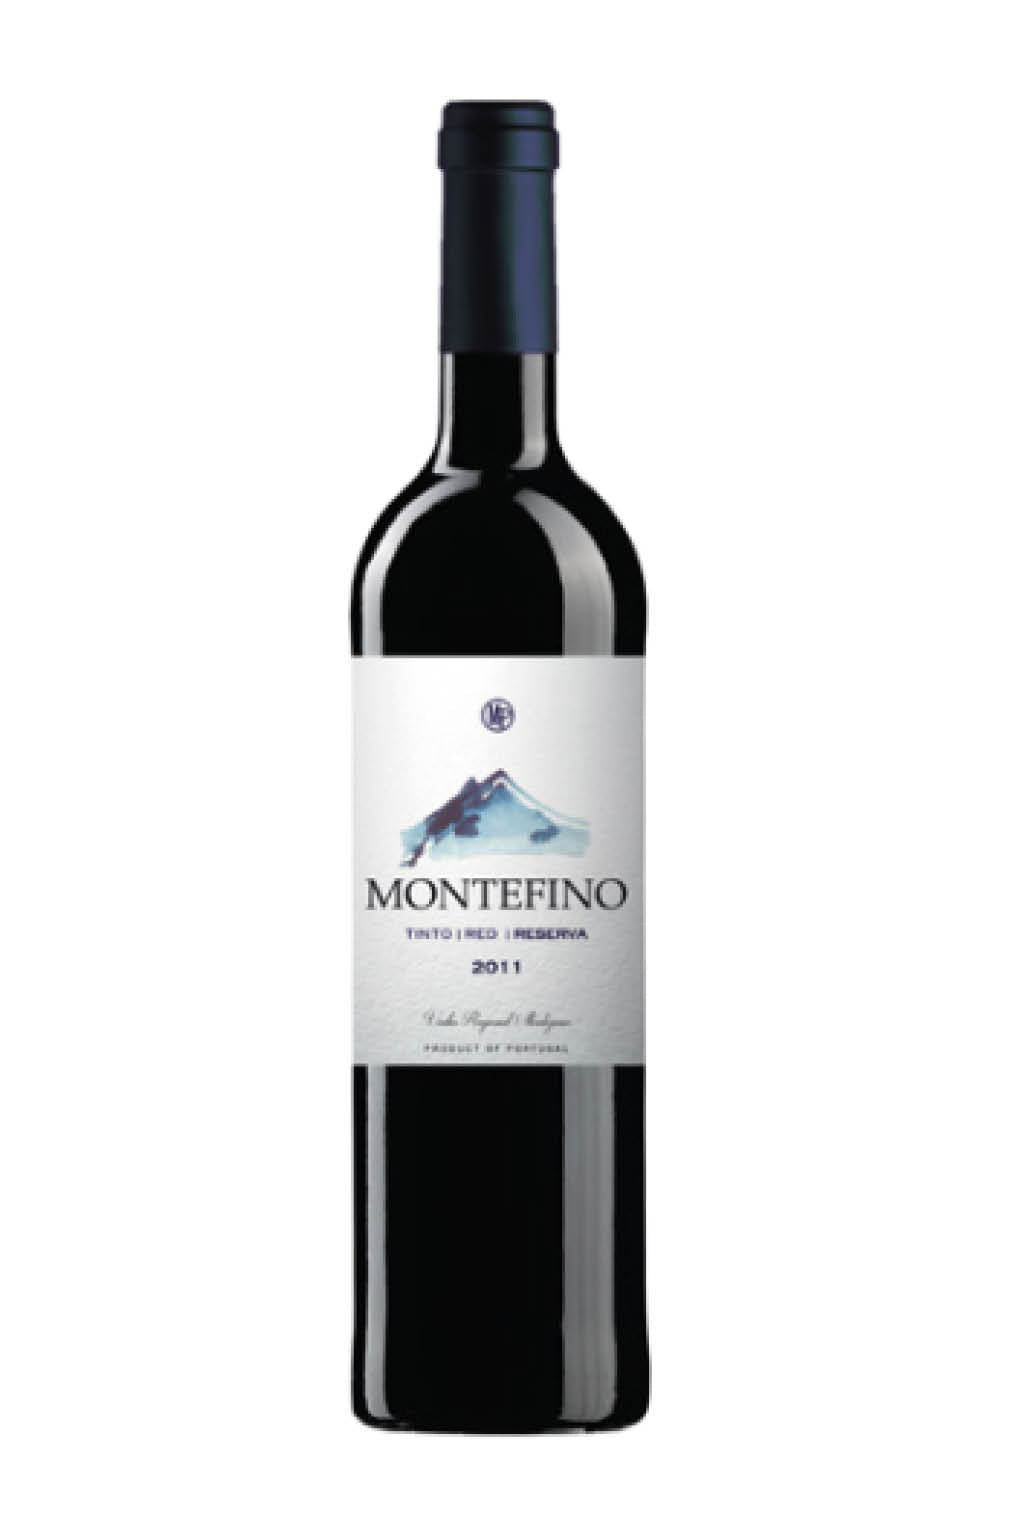 Montefino Reserva 2011 - Vinho Regional Alentejano